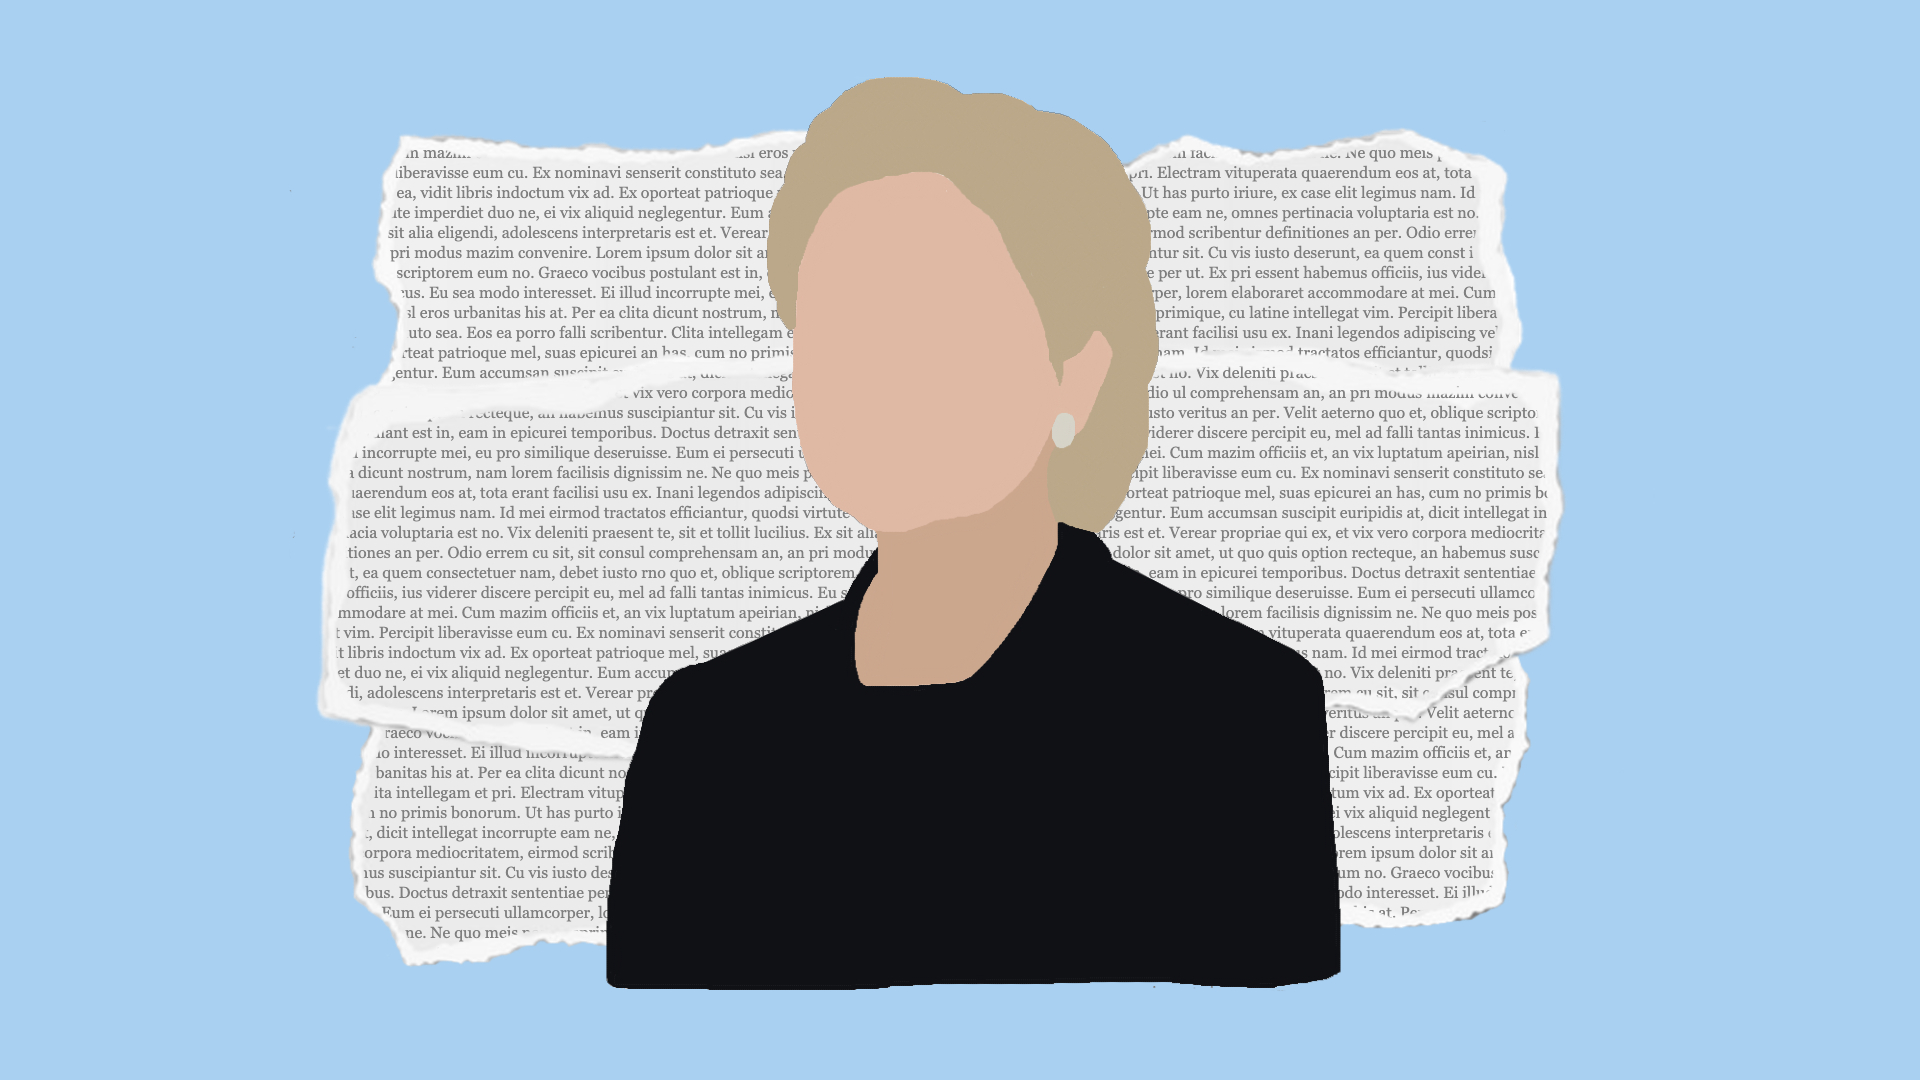 Portrait of Hillary Clinton against a light blue background.